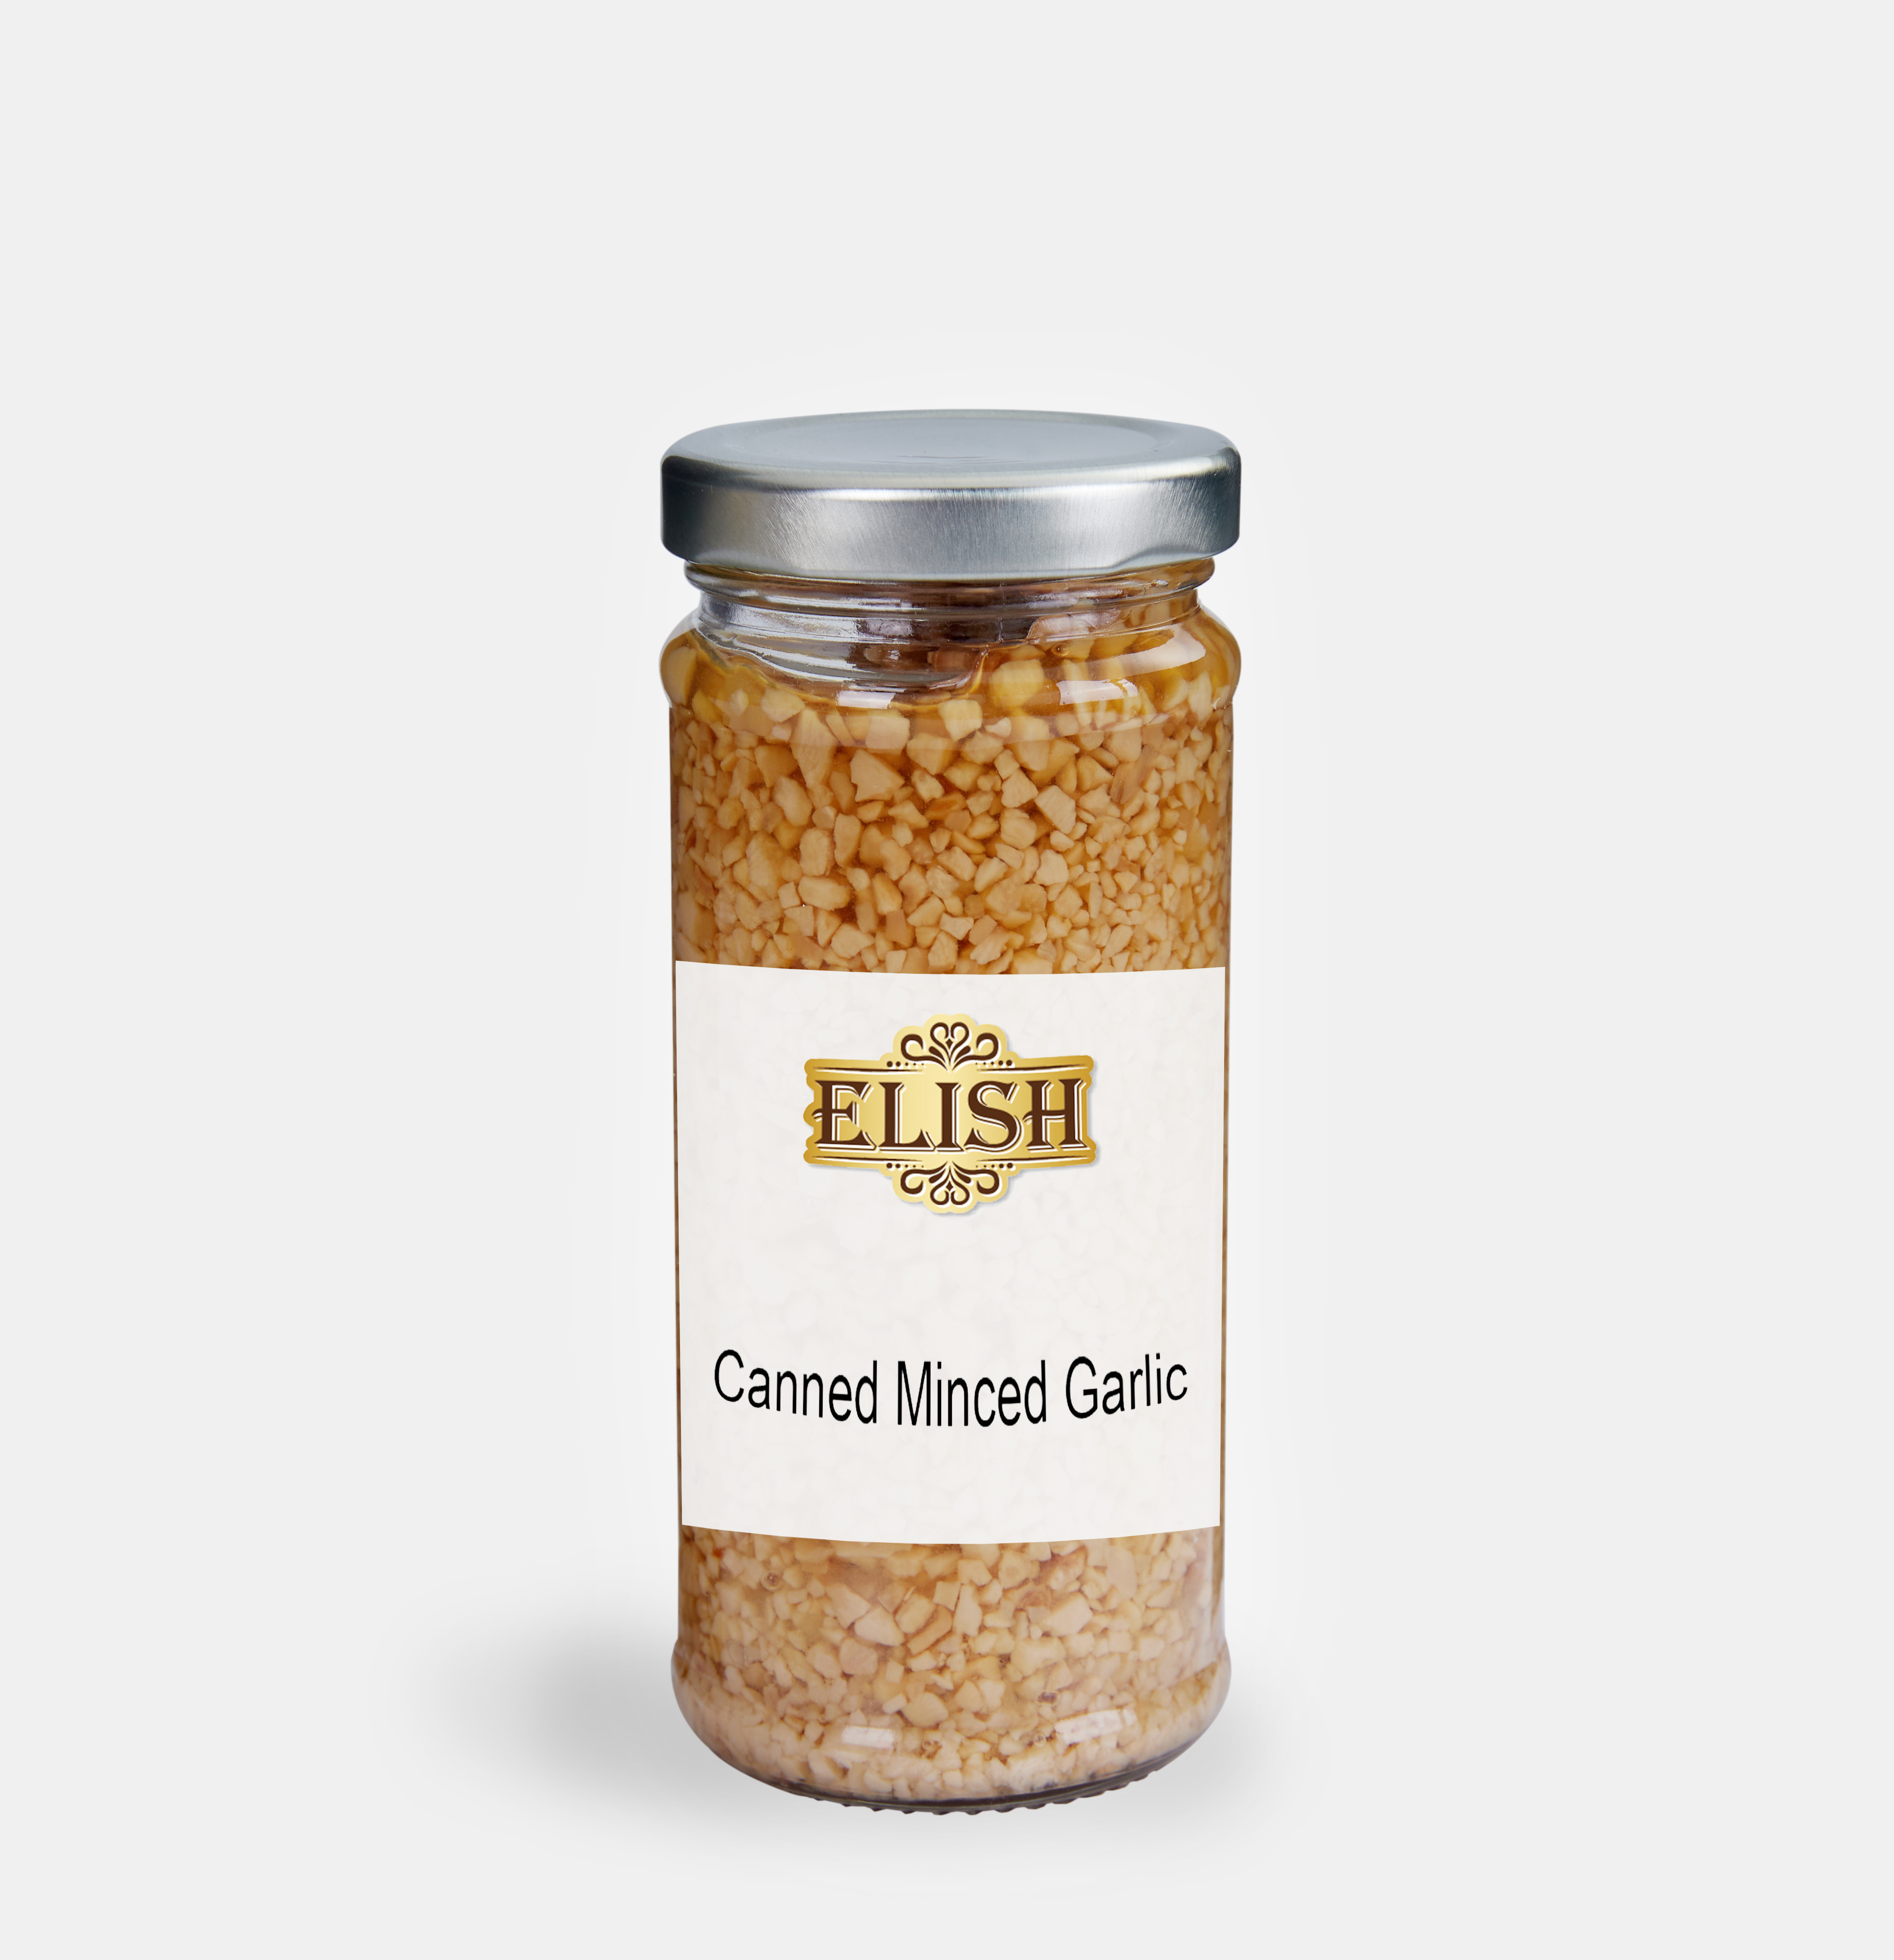 Canned Minced Garlic